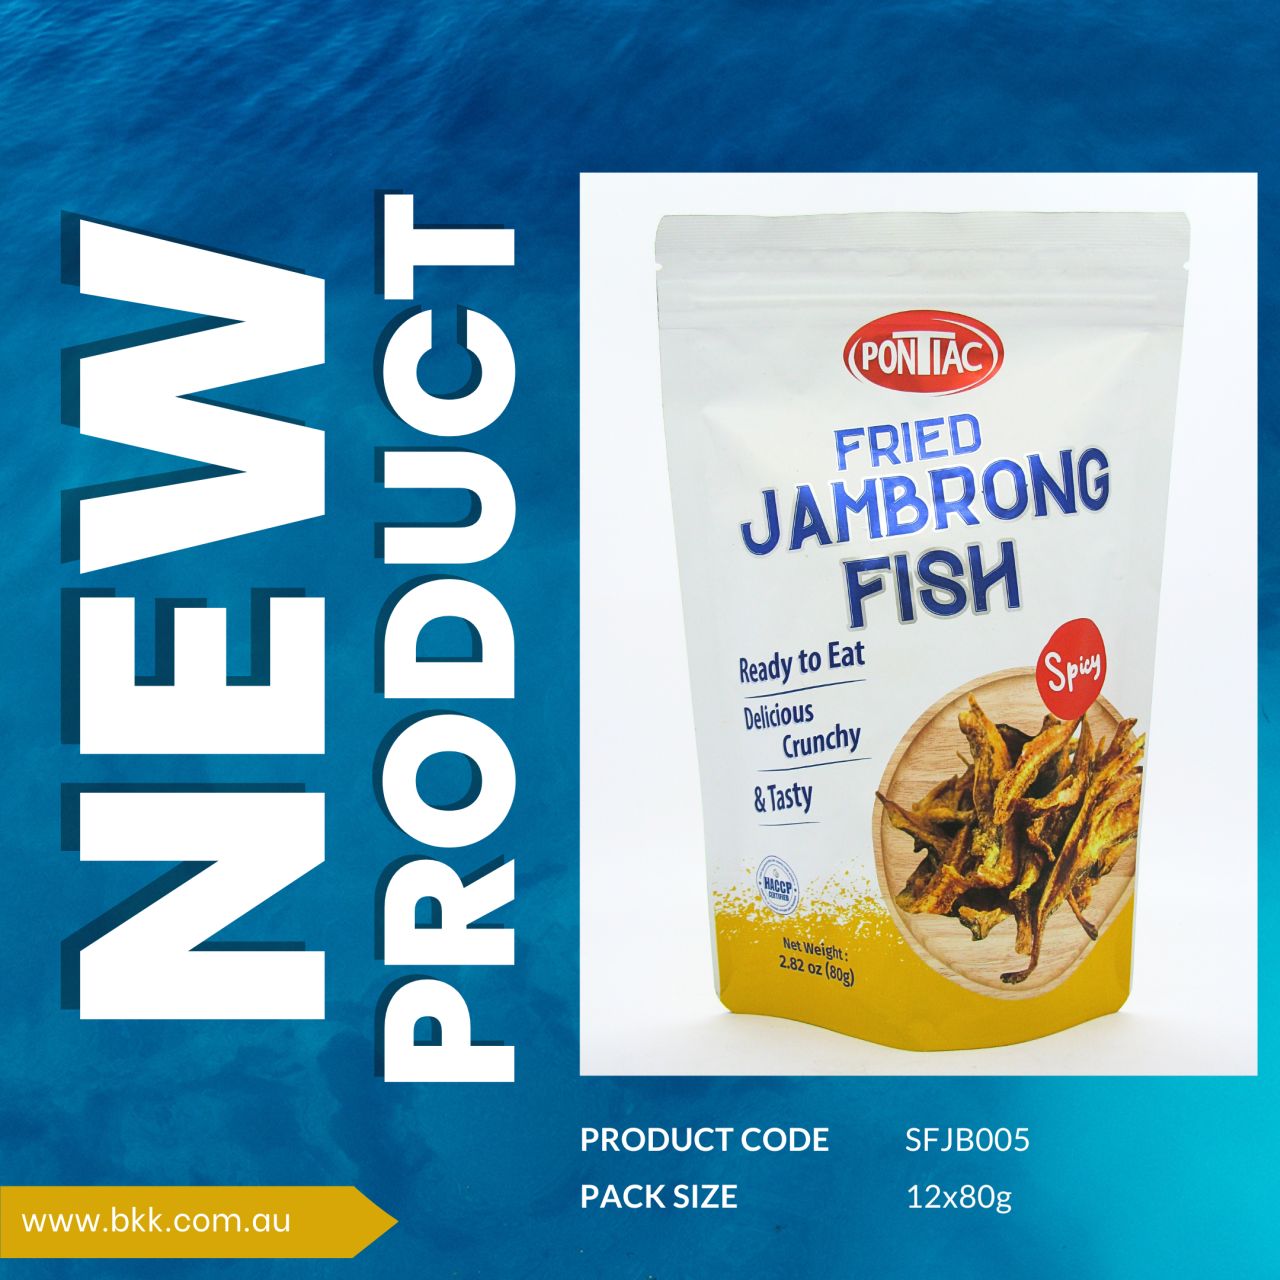 image presents Fried Jambrong Fish